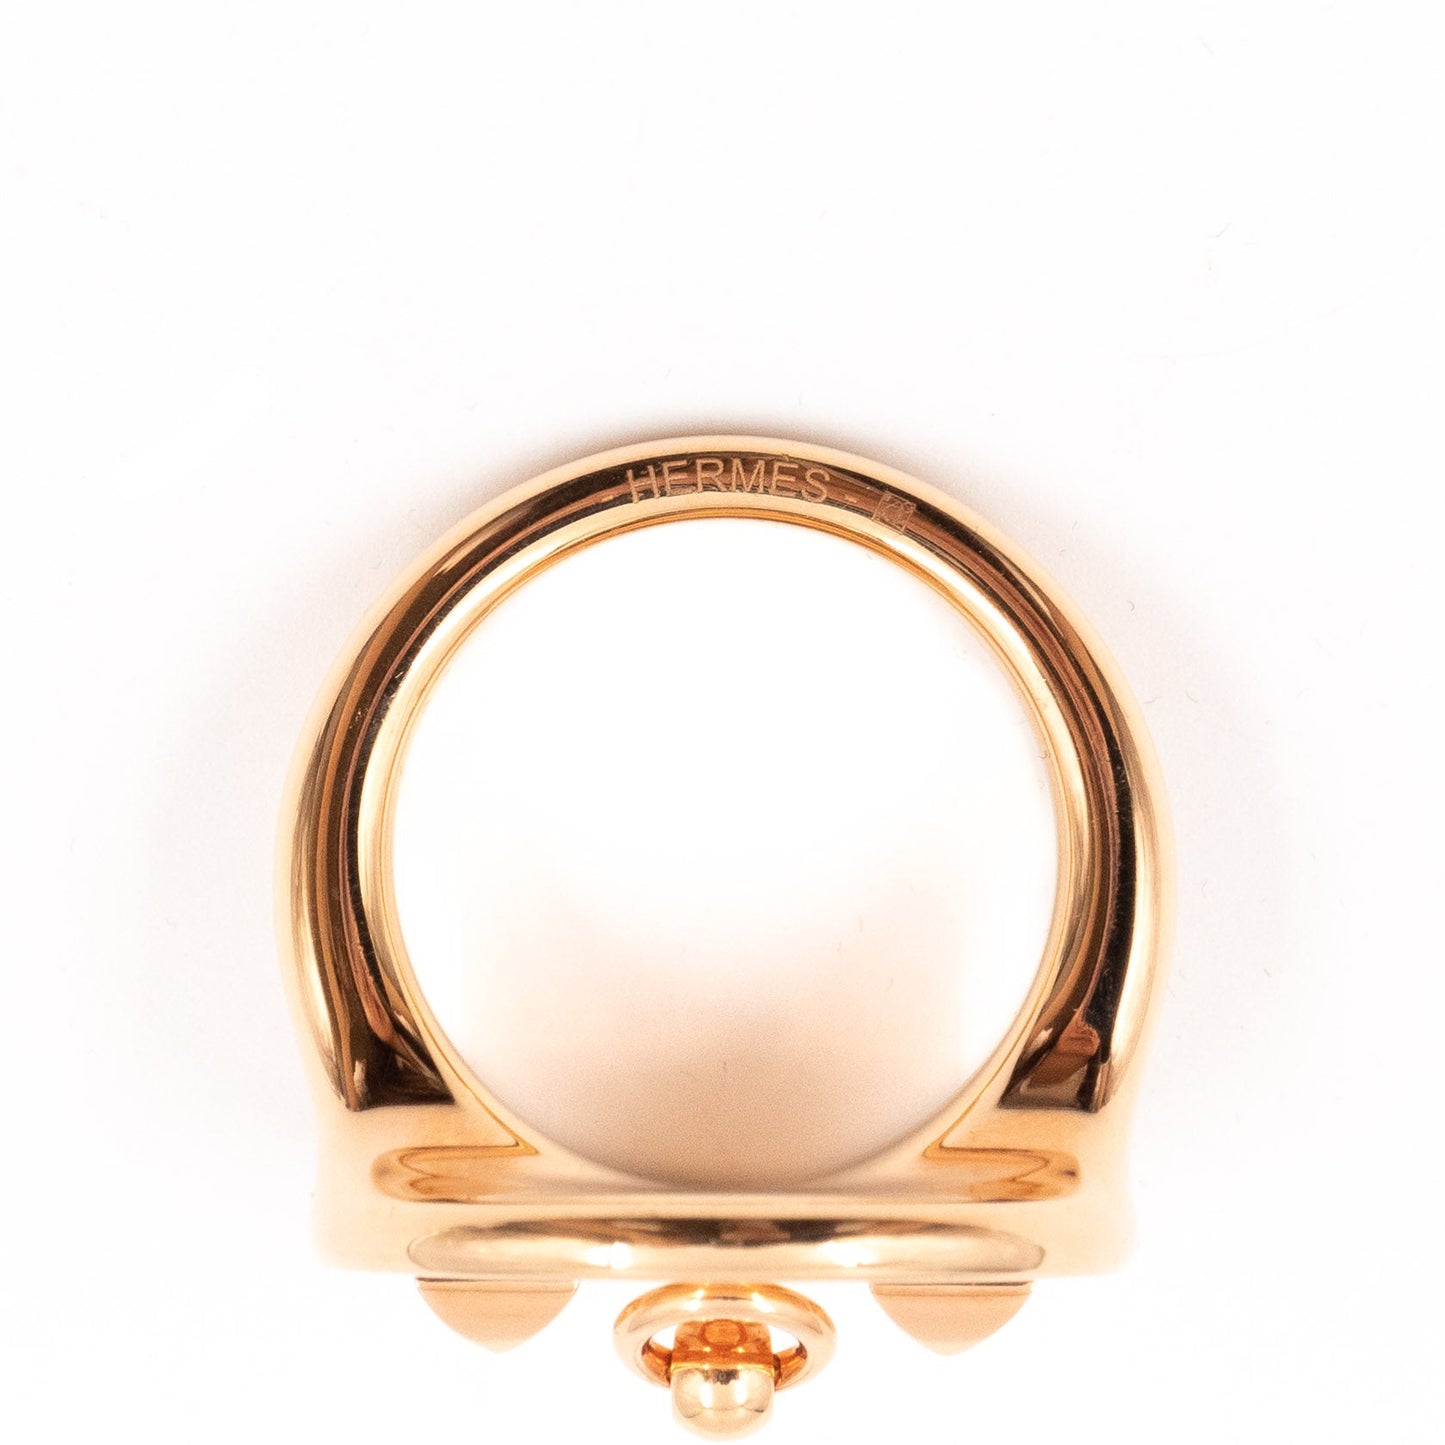 Collier de Chien Scarf 90 Ring Gold